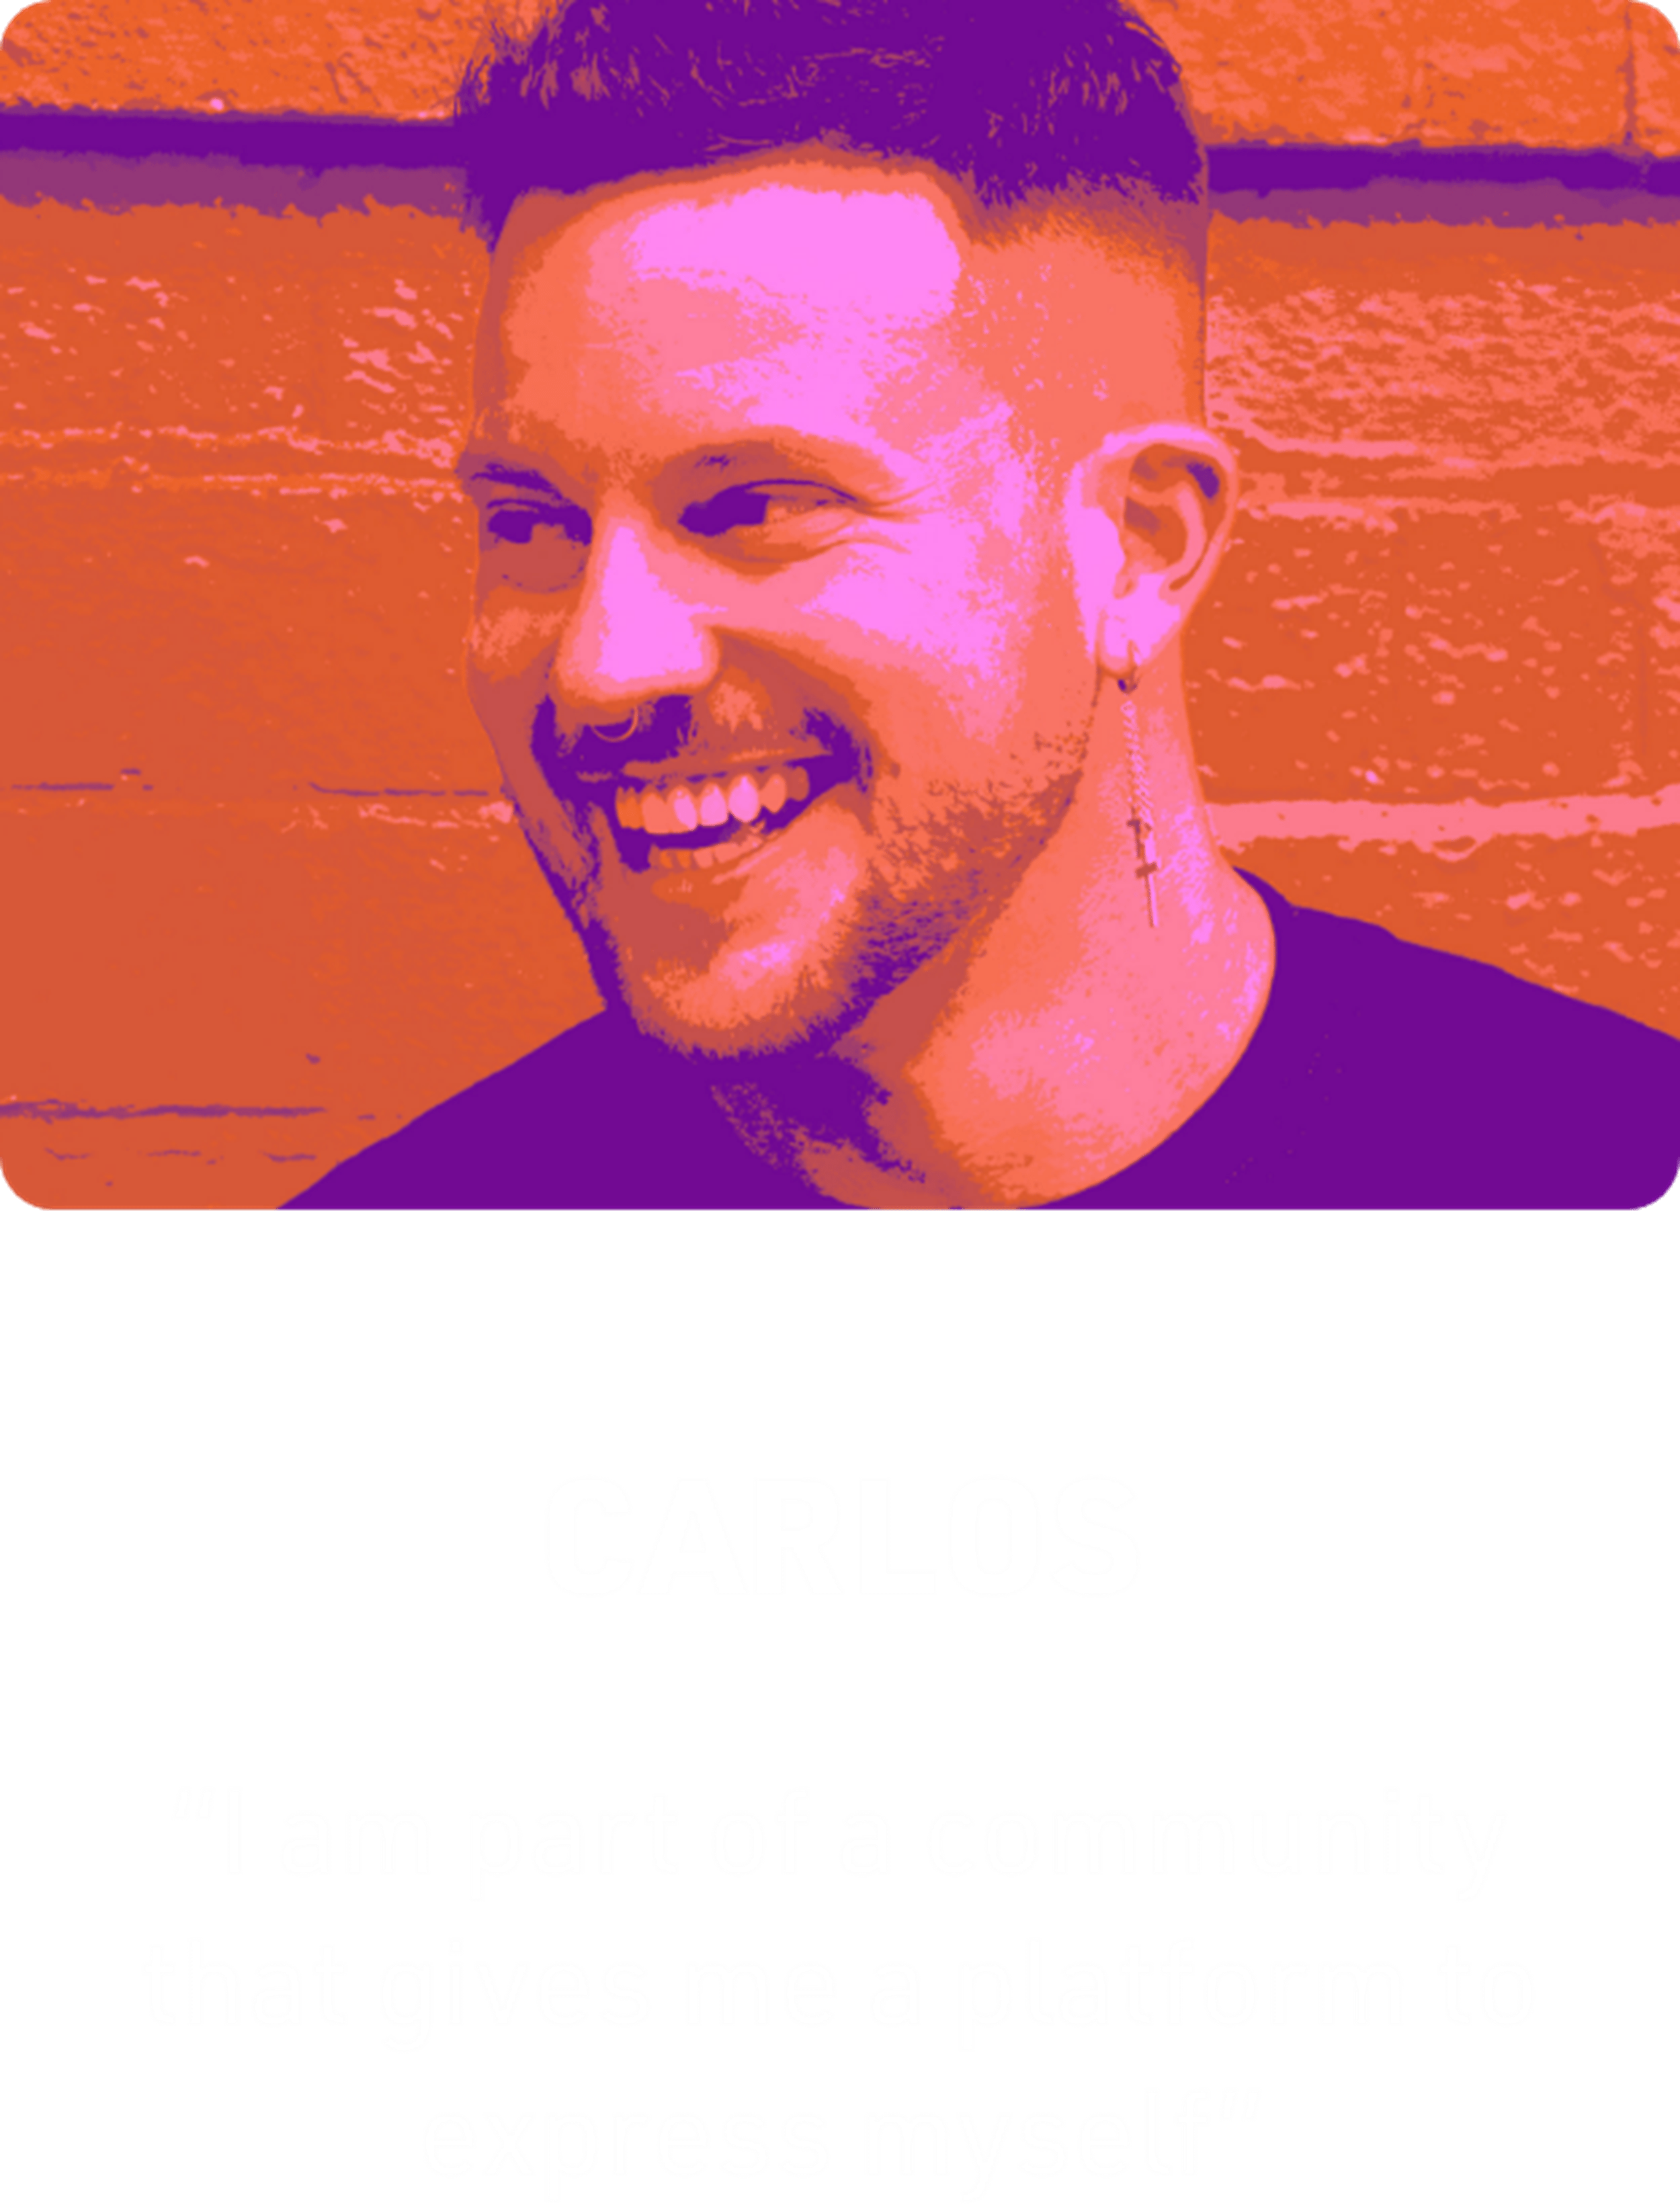 Carlos's story